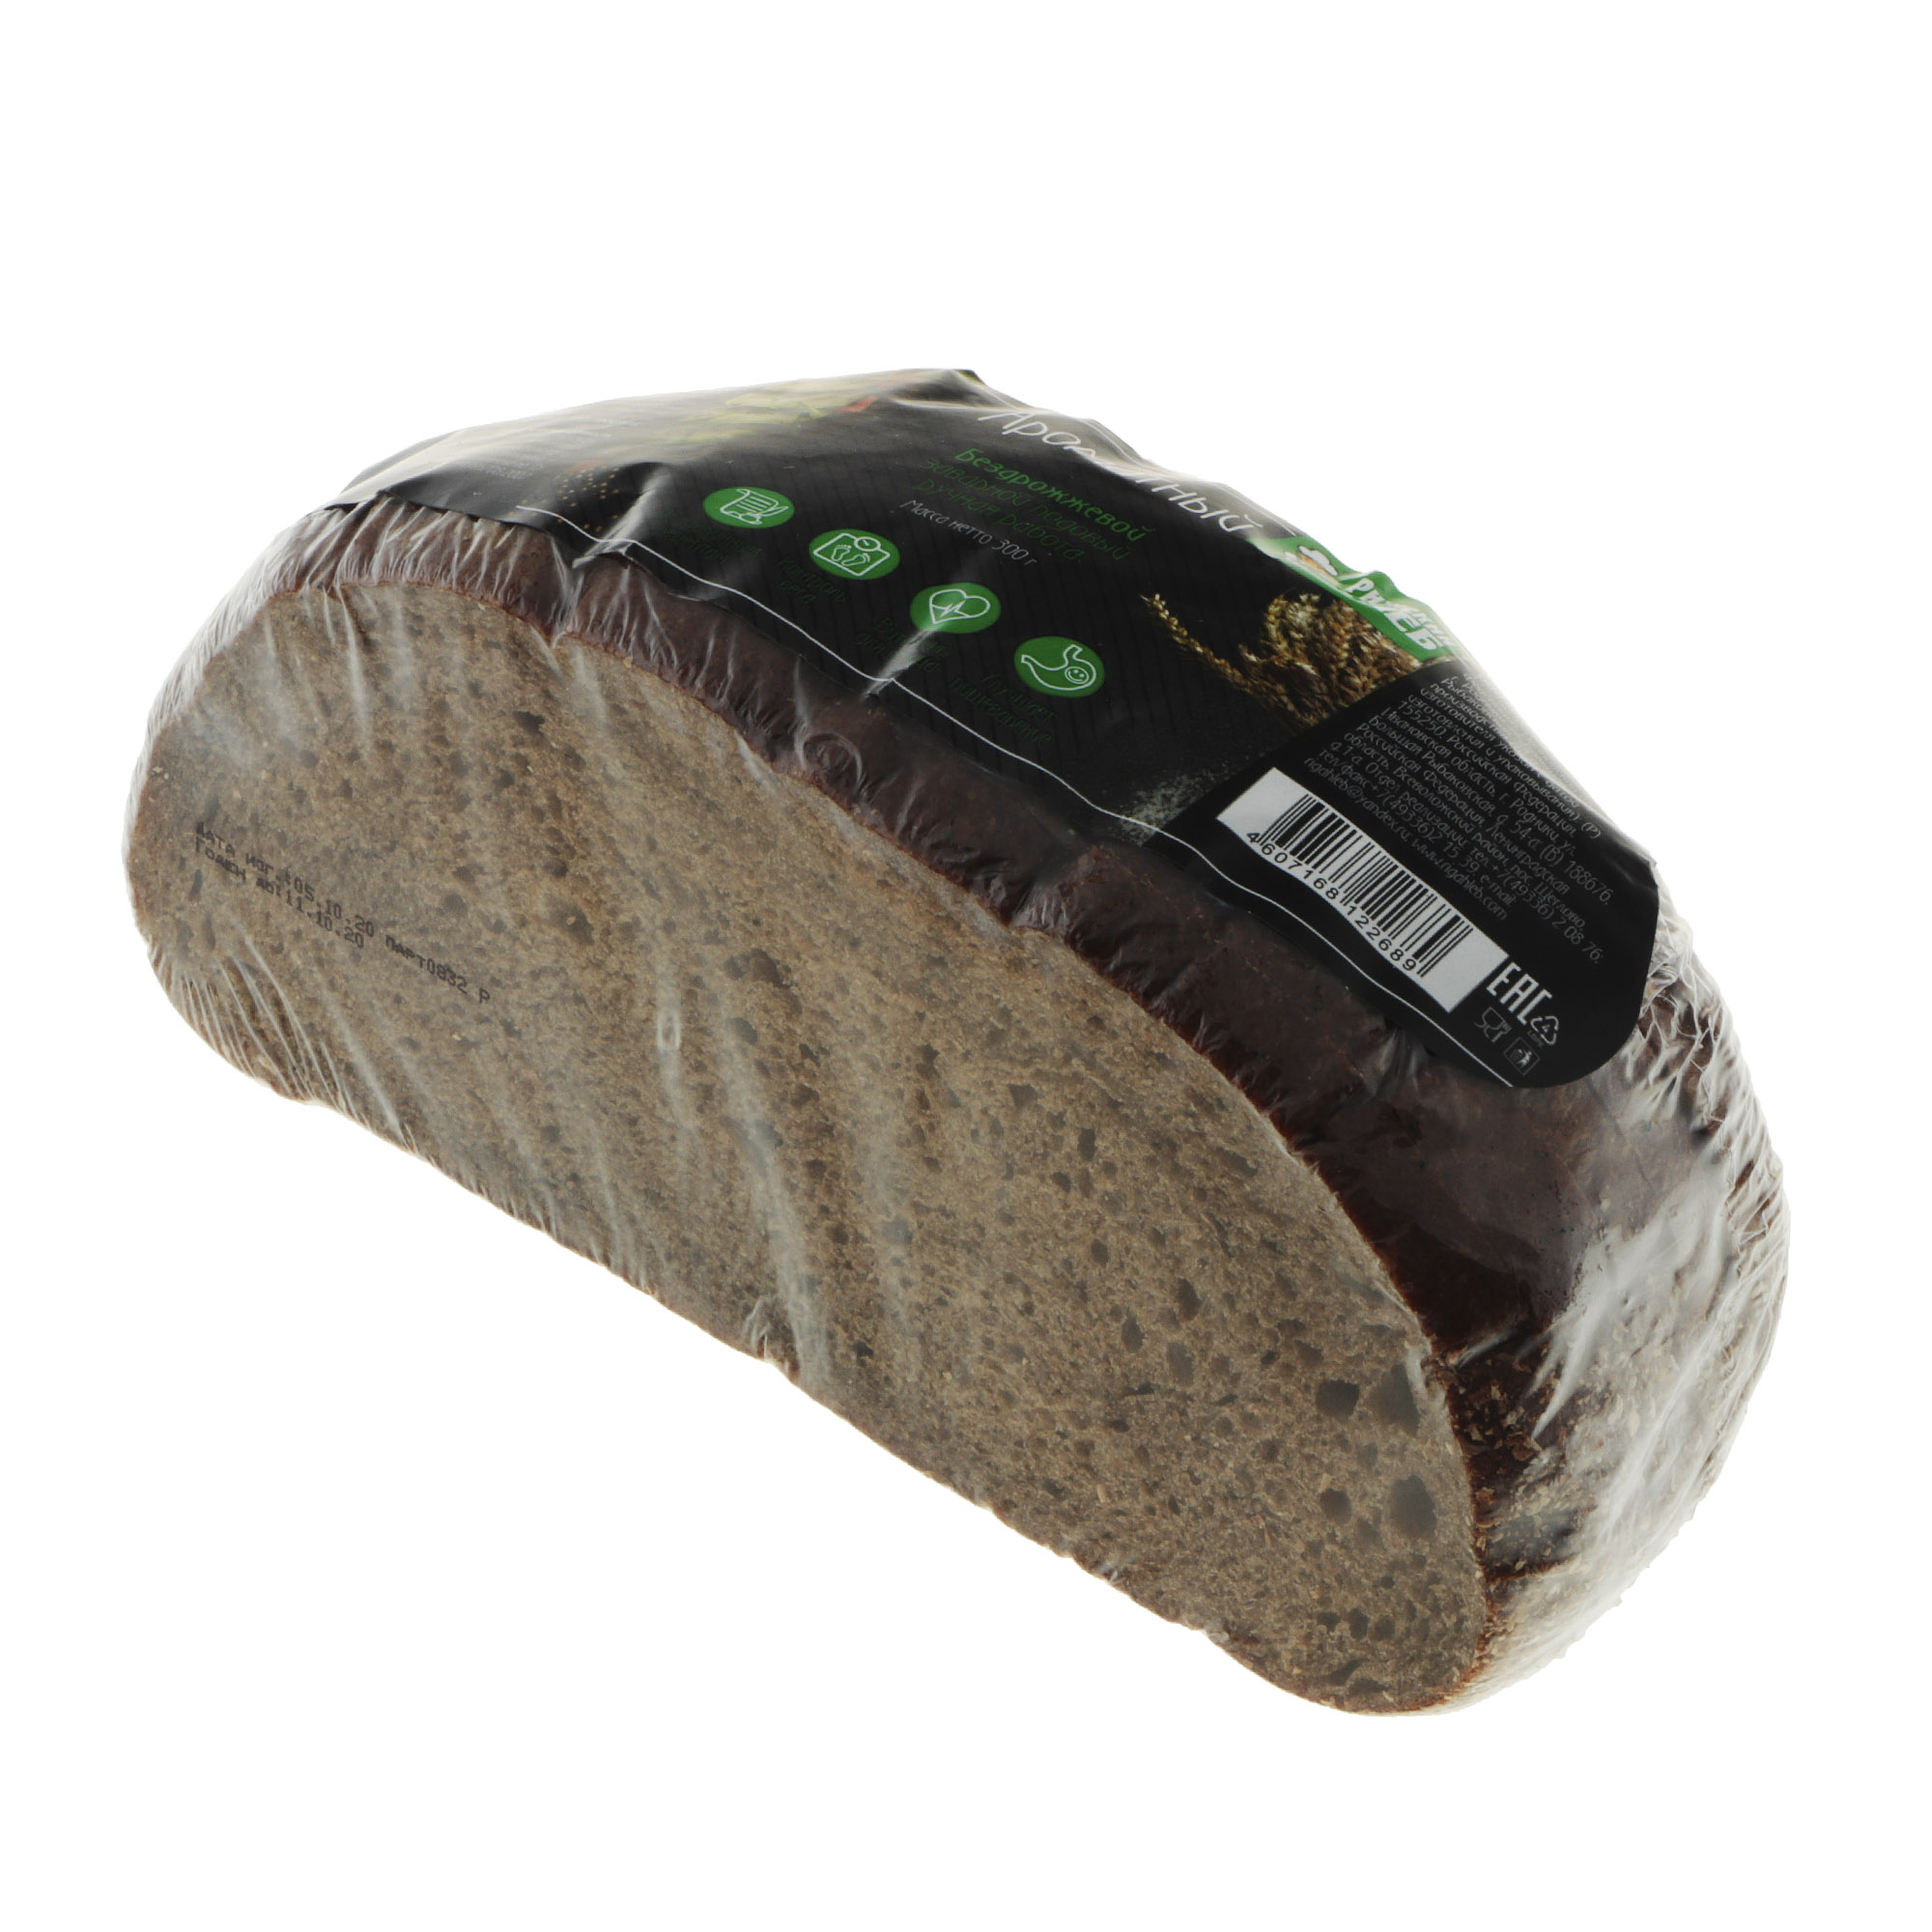 Хлеб Рижский хлеб ароматный 300 г хлеб рижский хлеб боярский 220 г